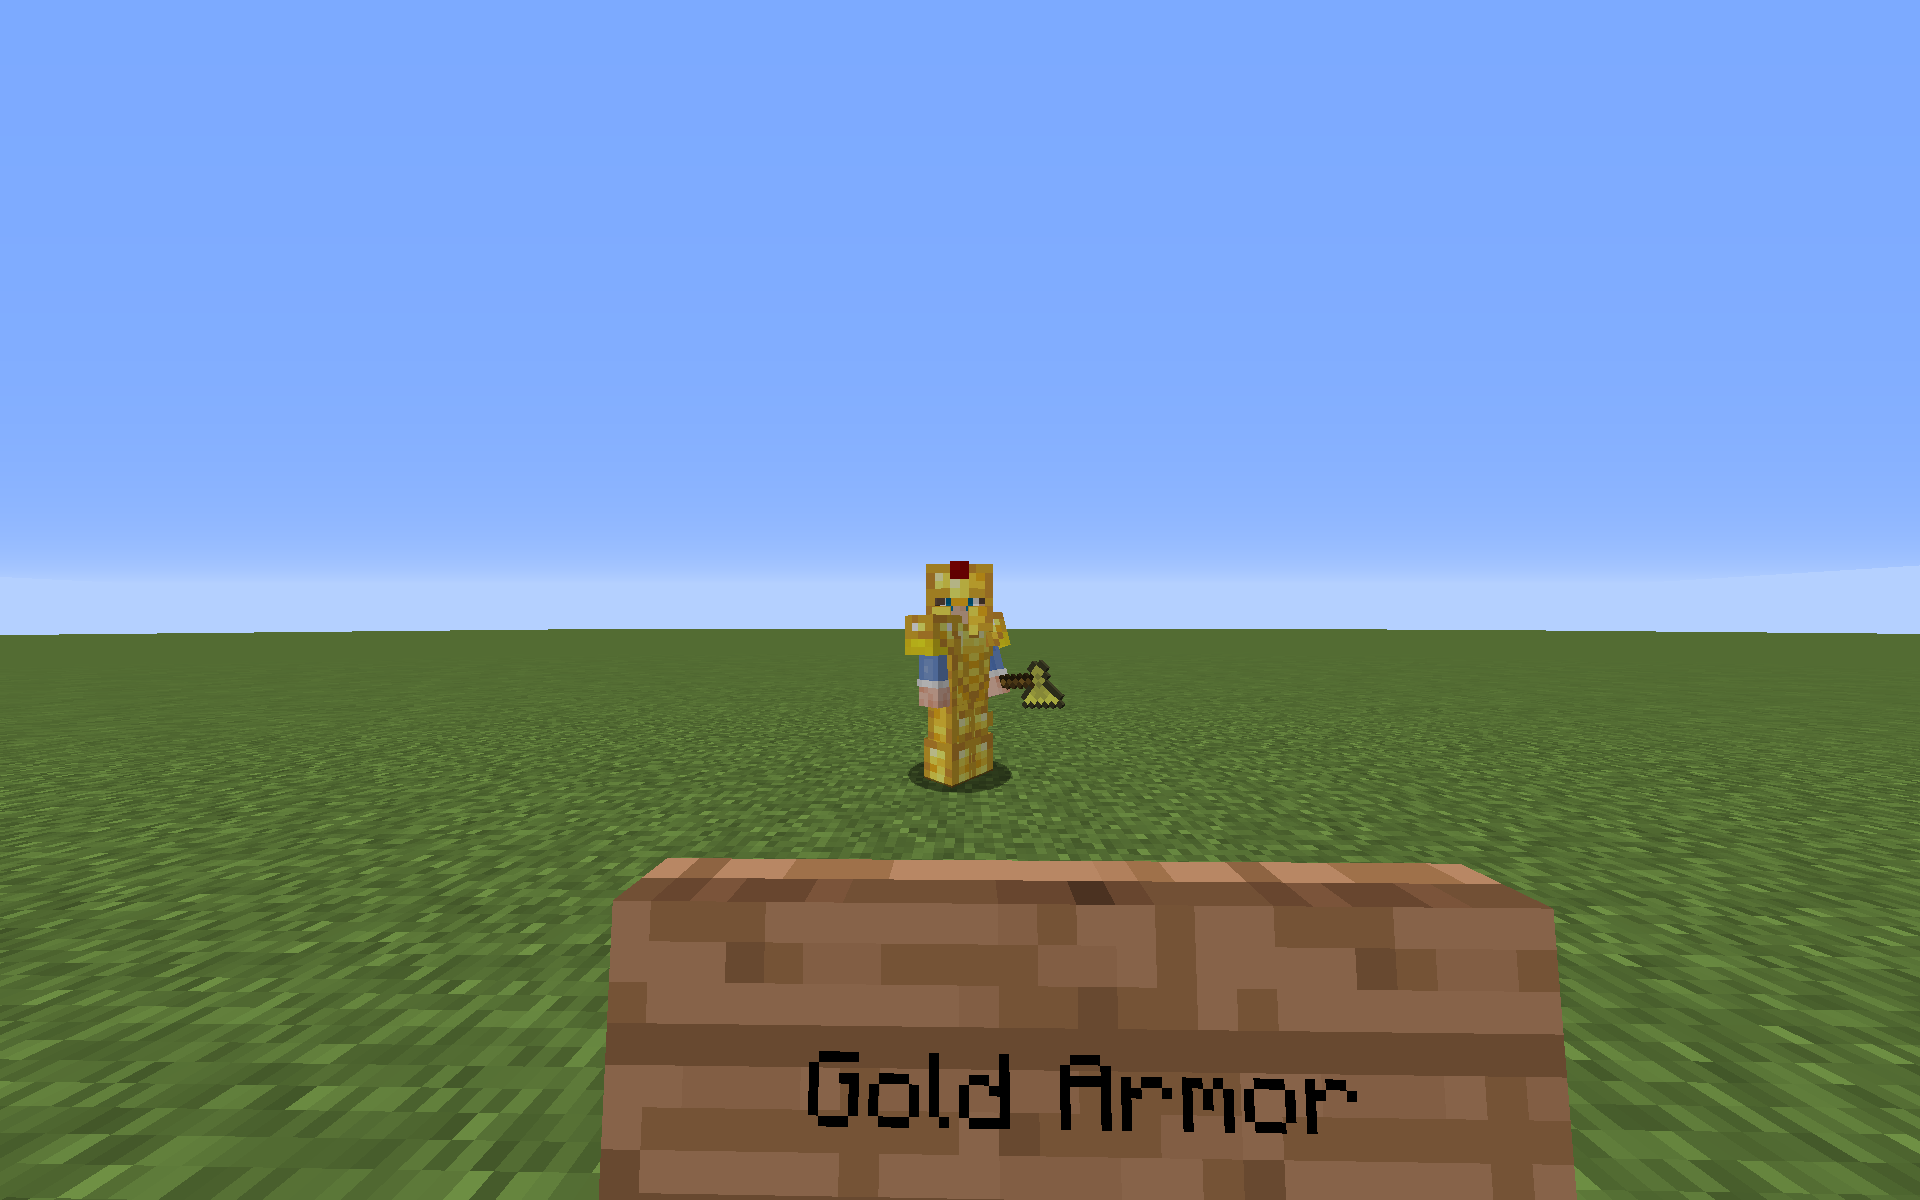 Gold Armor (Worn)